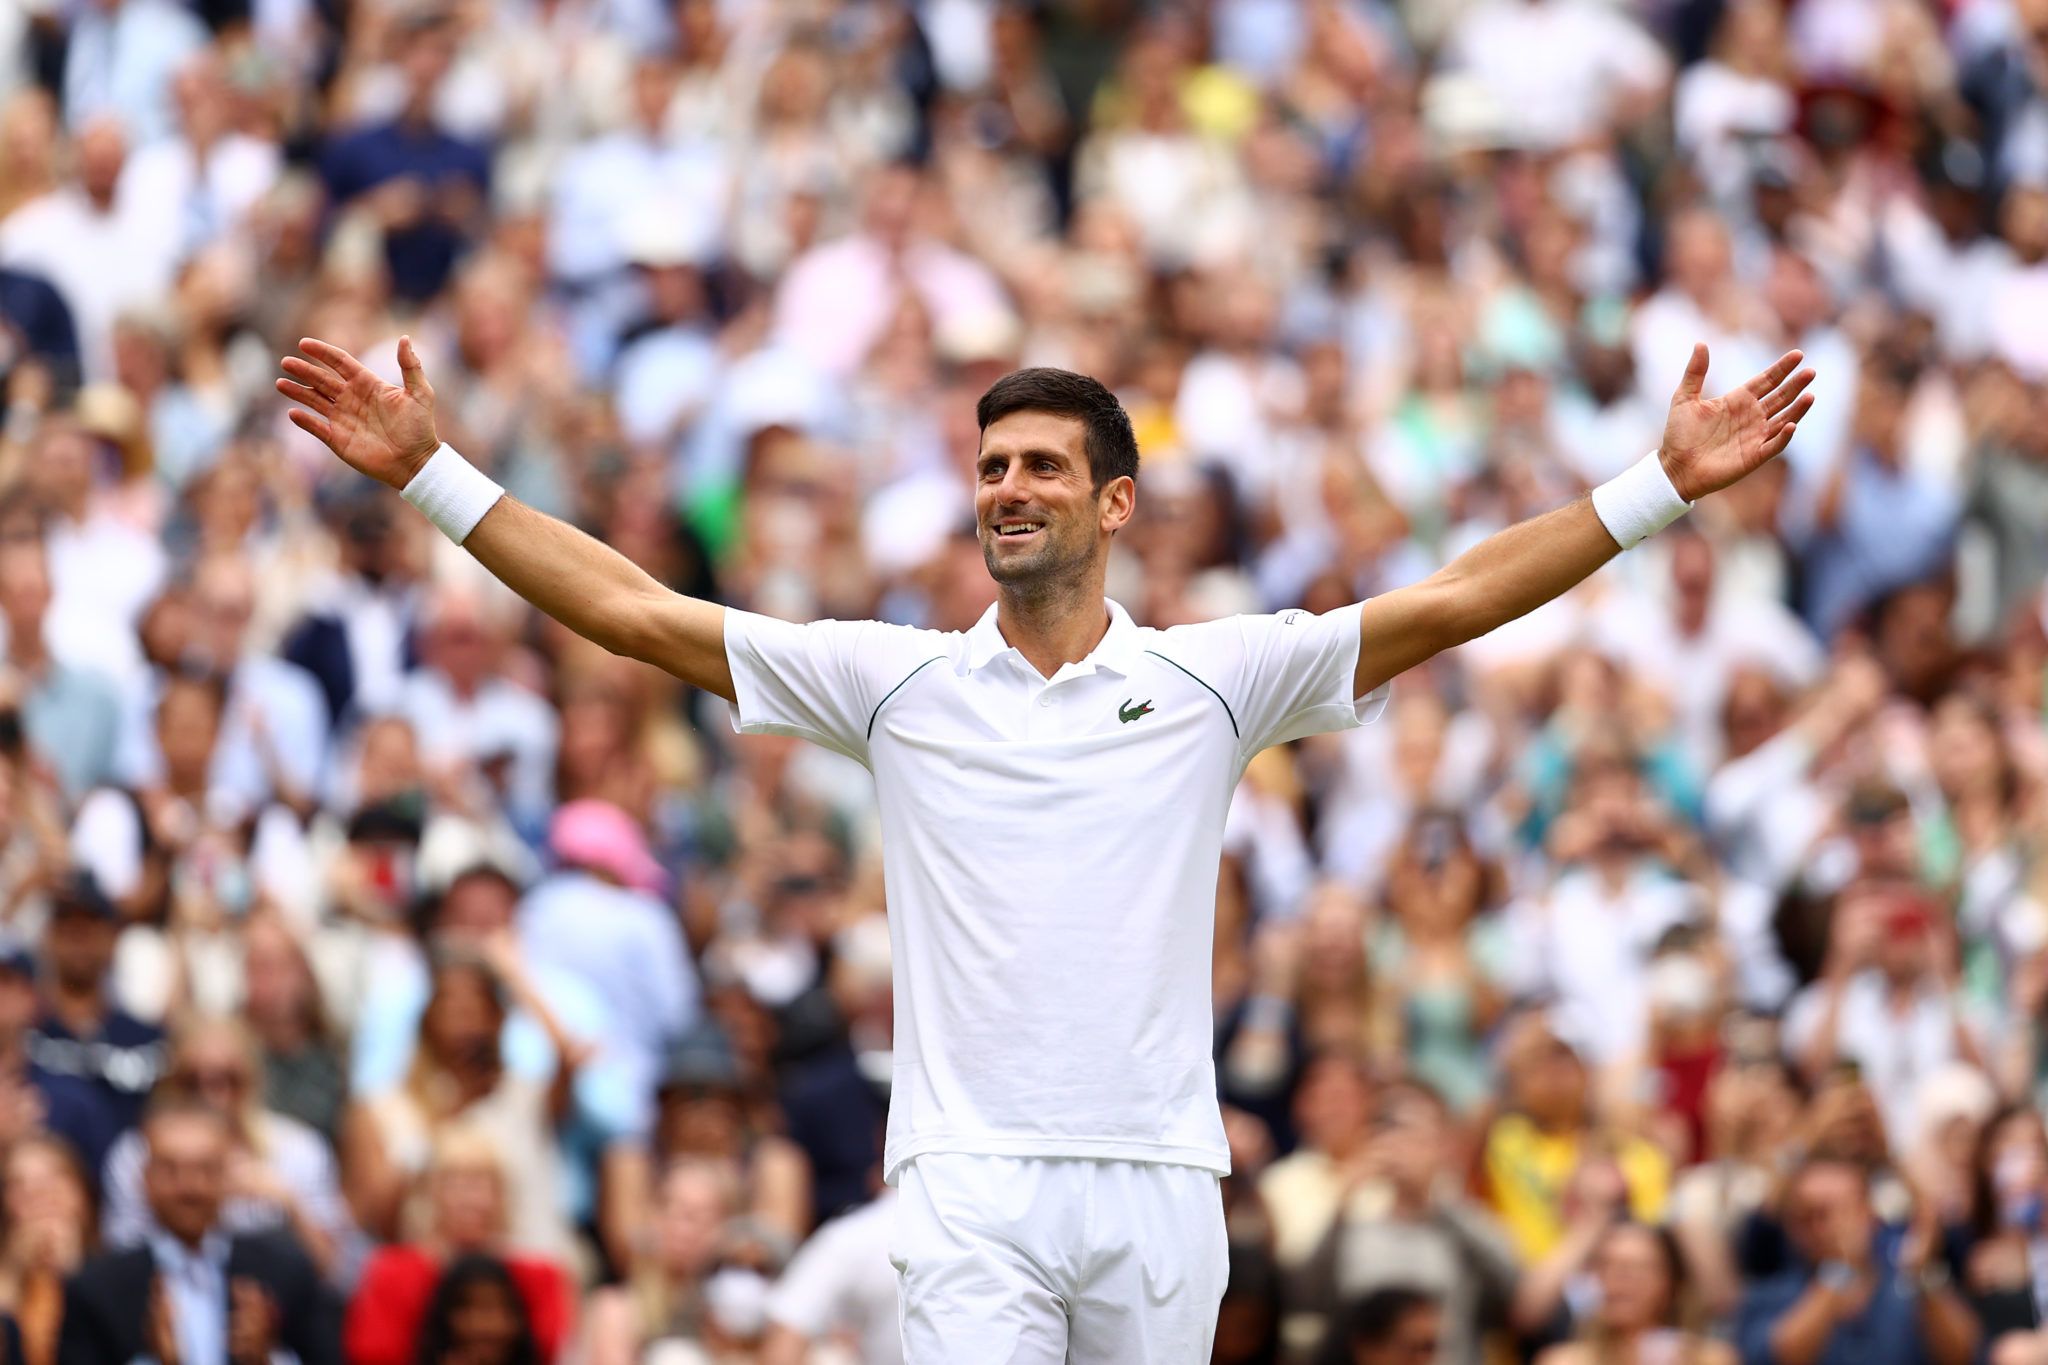 Sports World Reacts To Novak Djokovic's Historic Win